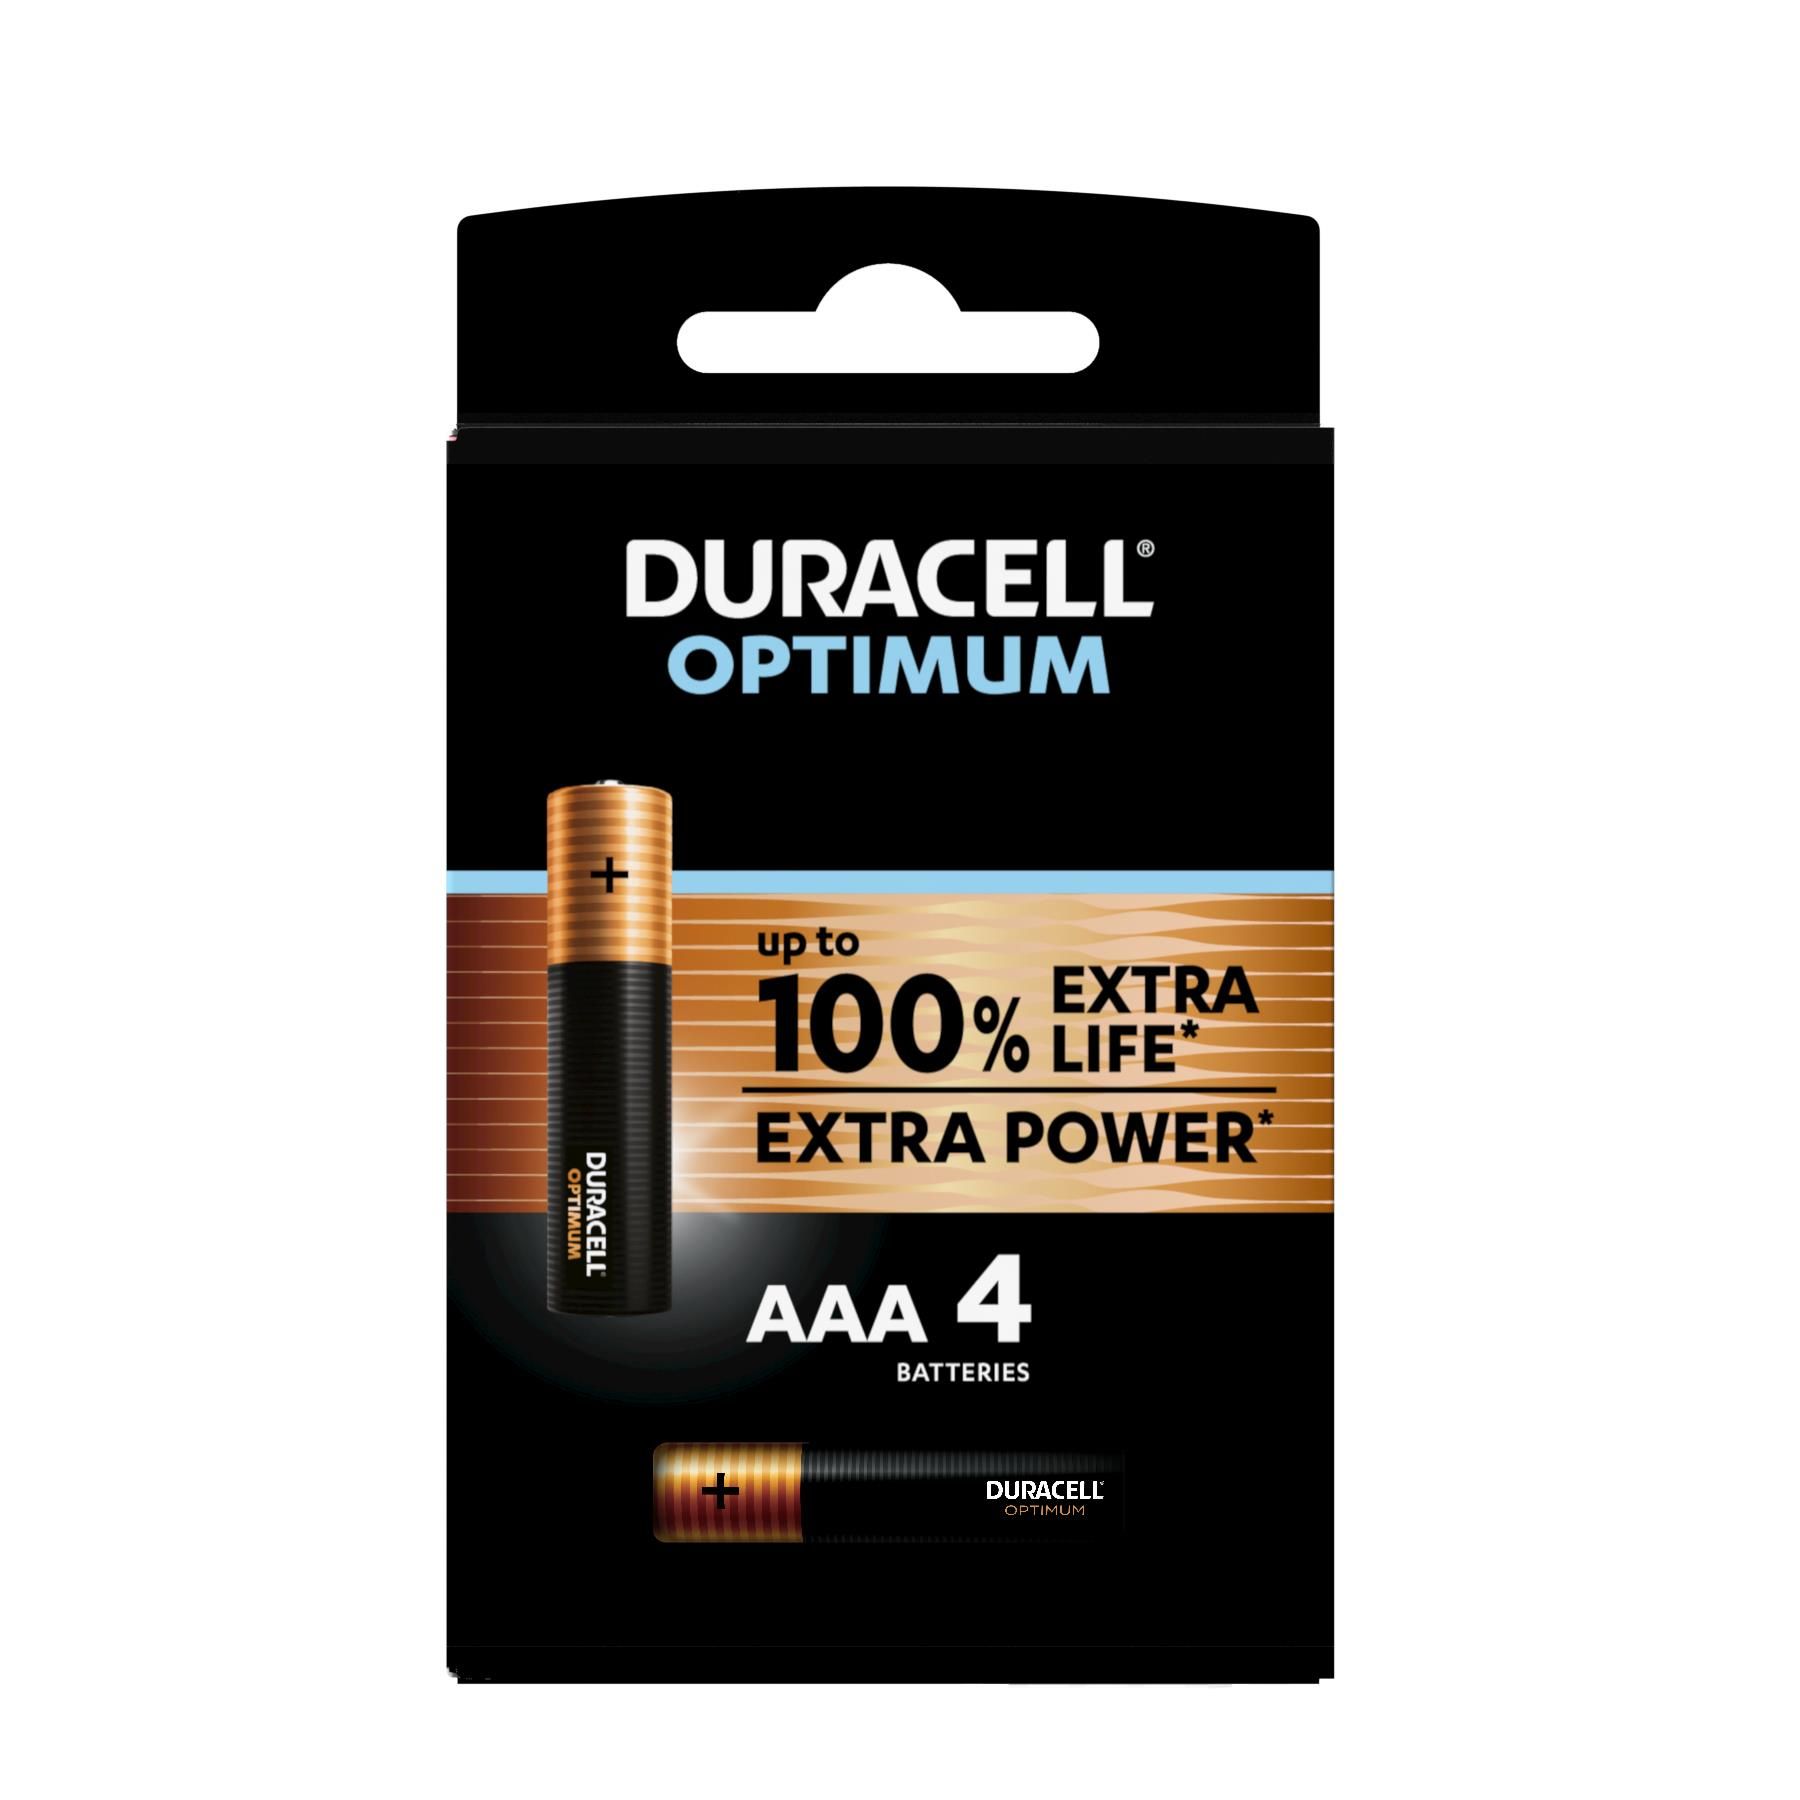 Duracell Batterie Stilo Optimum